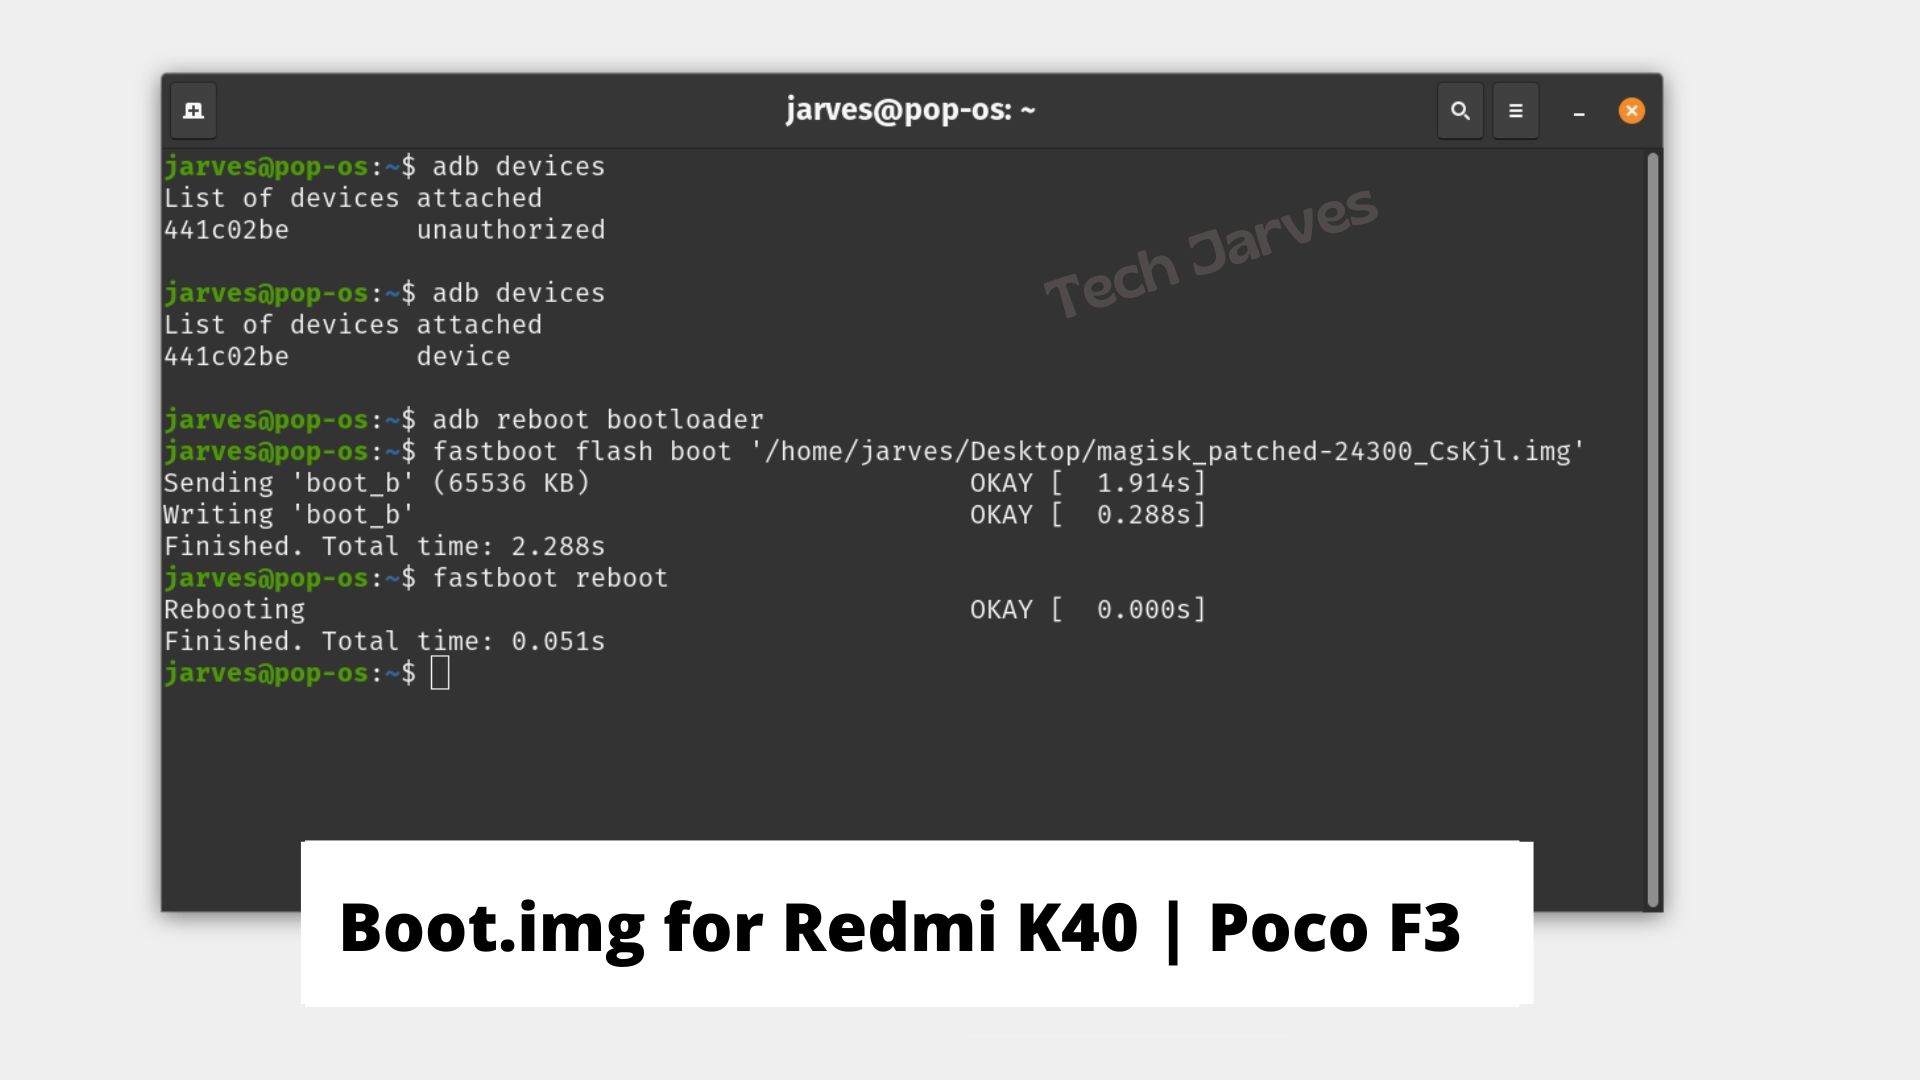 Boot.img for Redmi K40 Poco f3